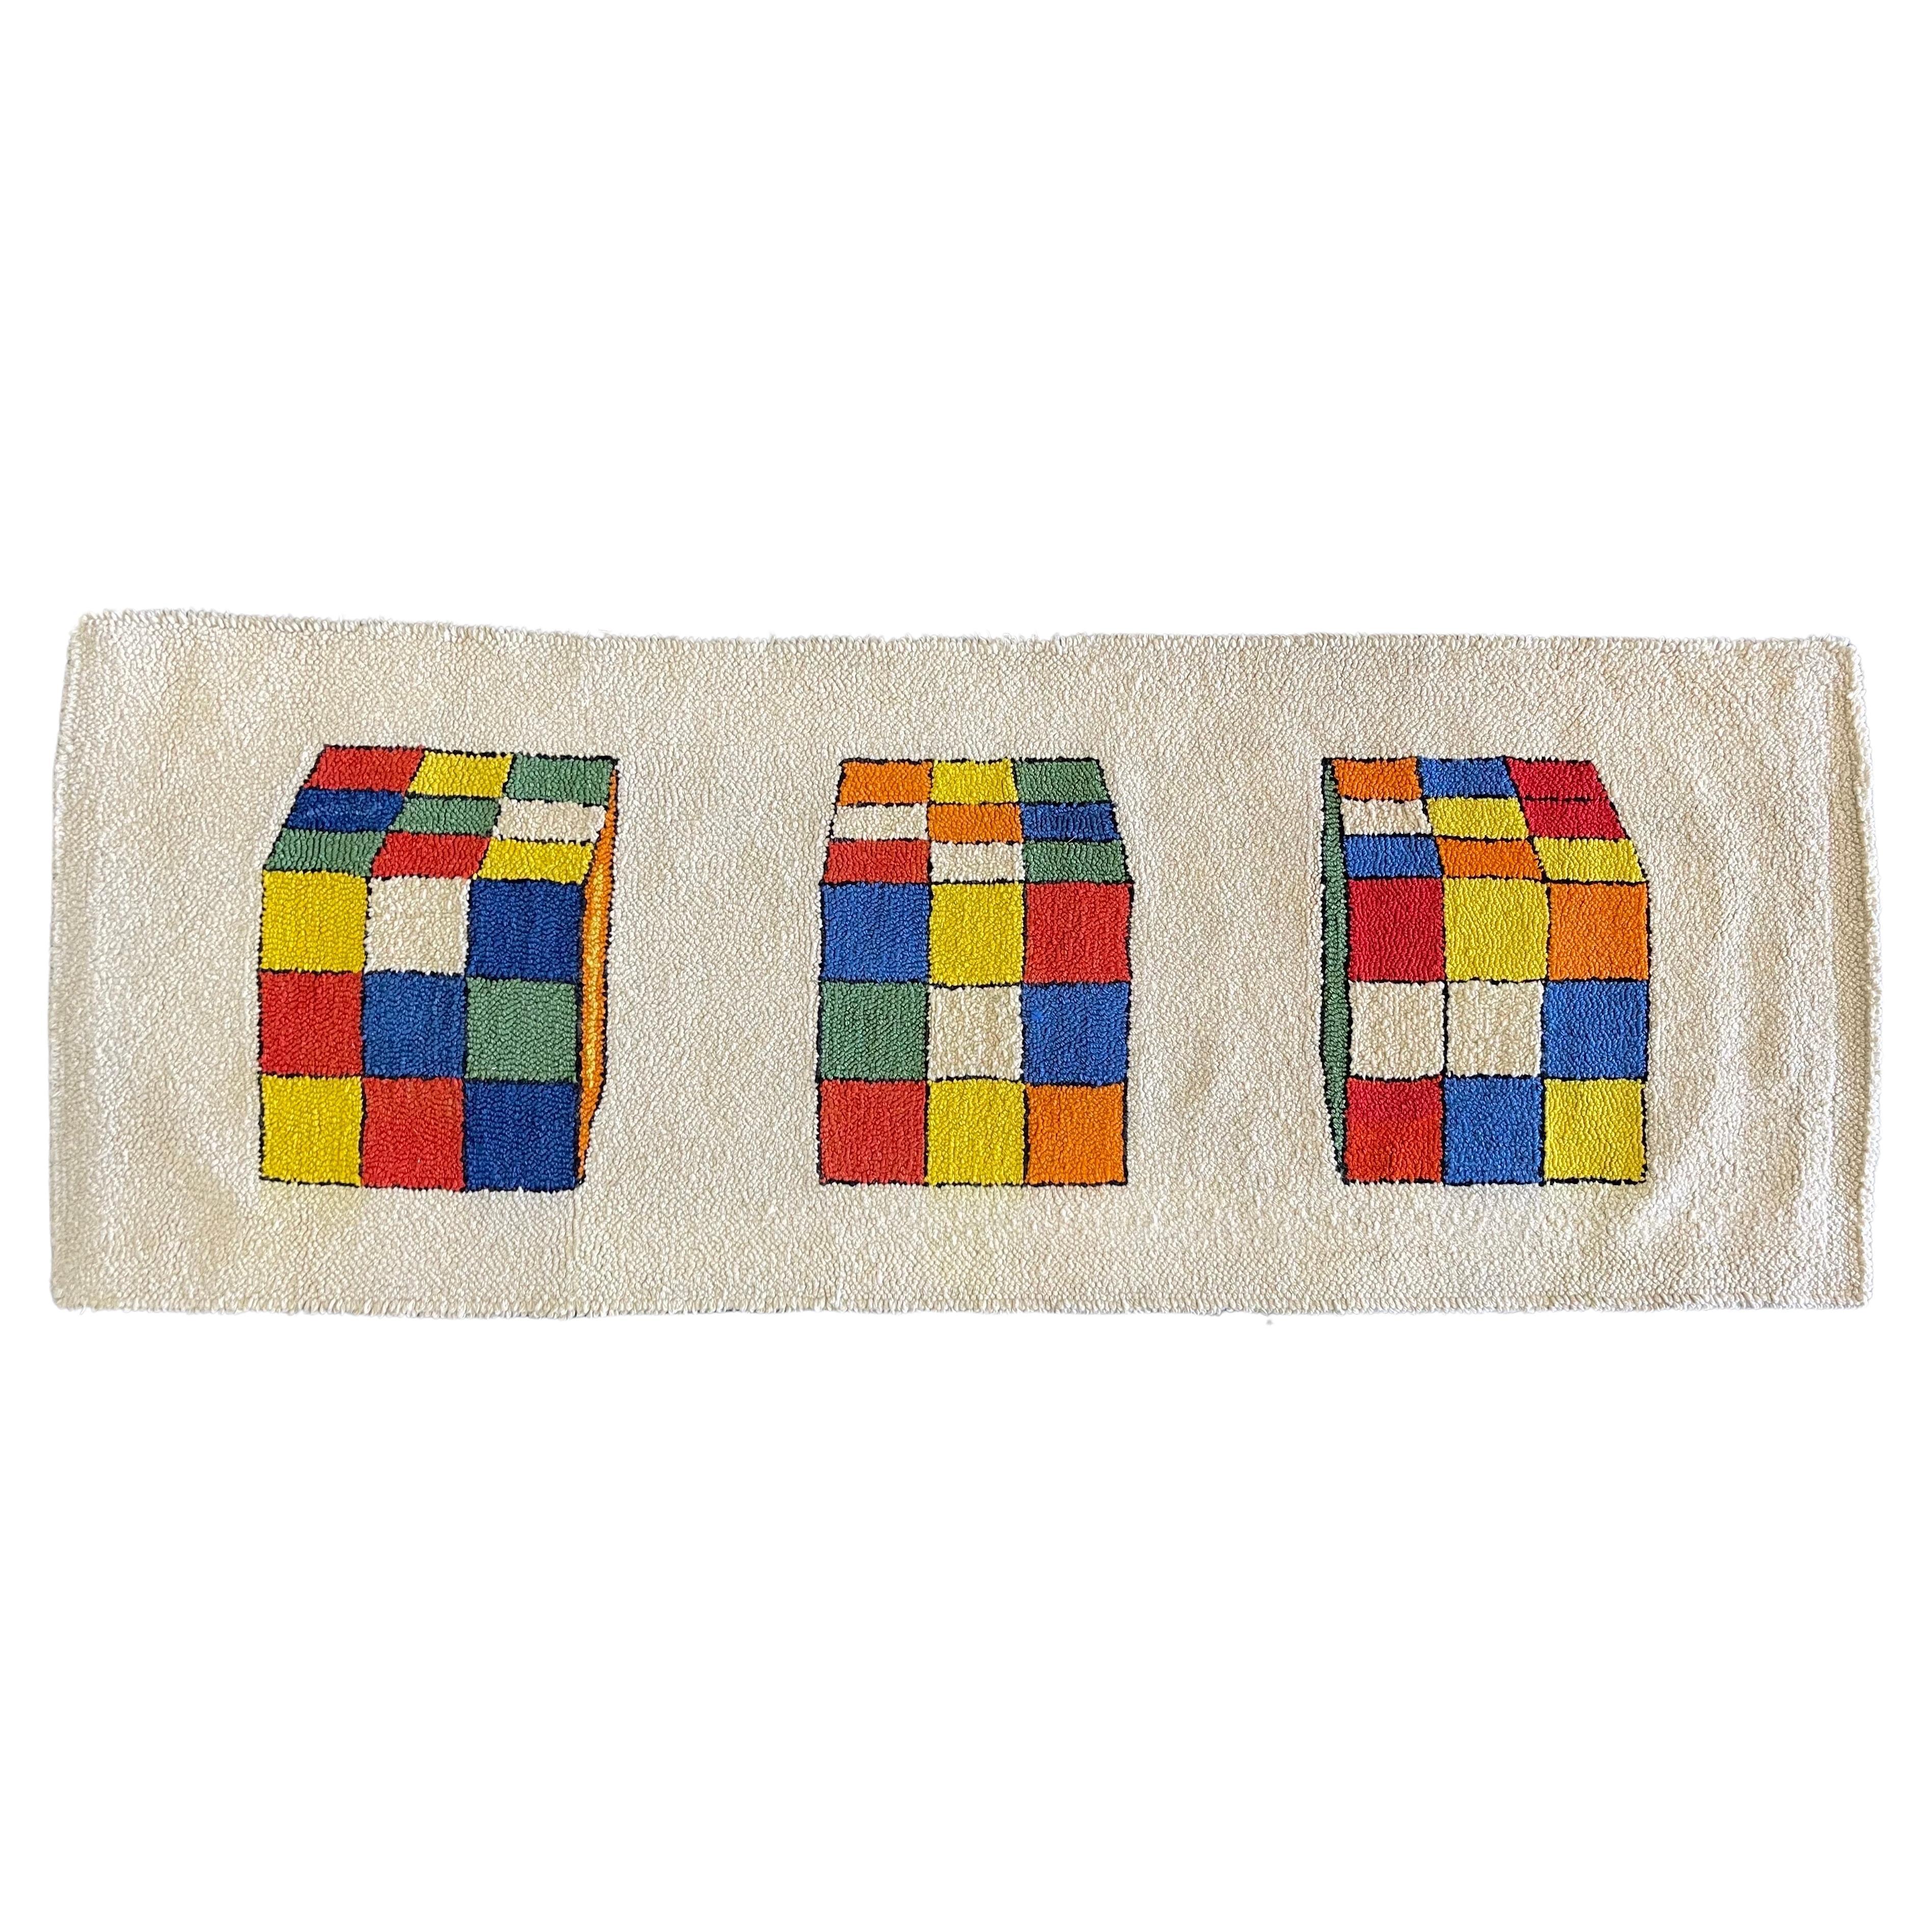 MCM Hand-Woven "Rubik's Cube" Wool Rug / Runner